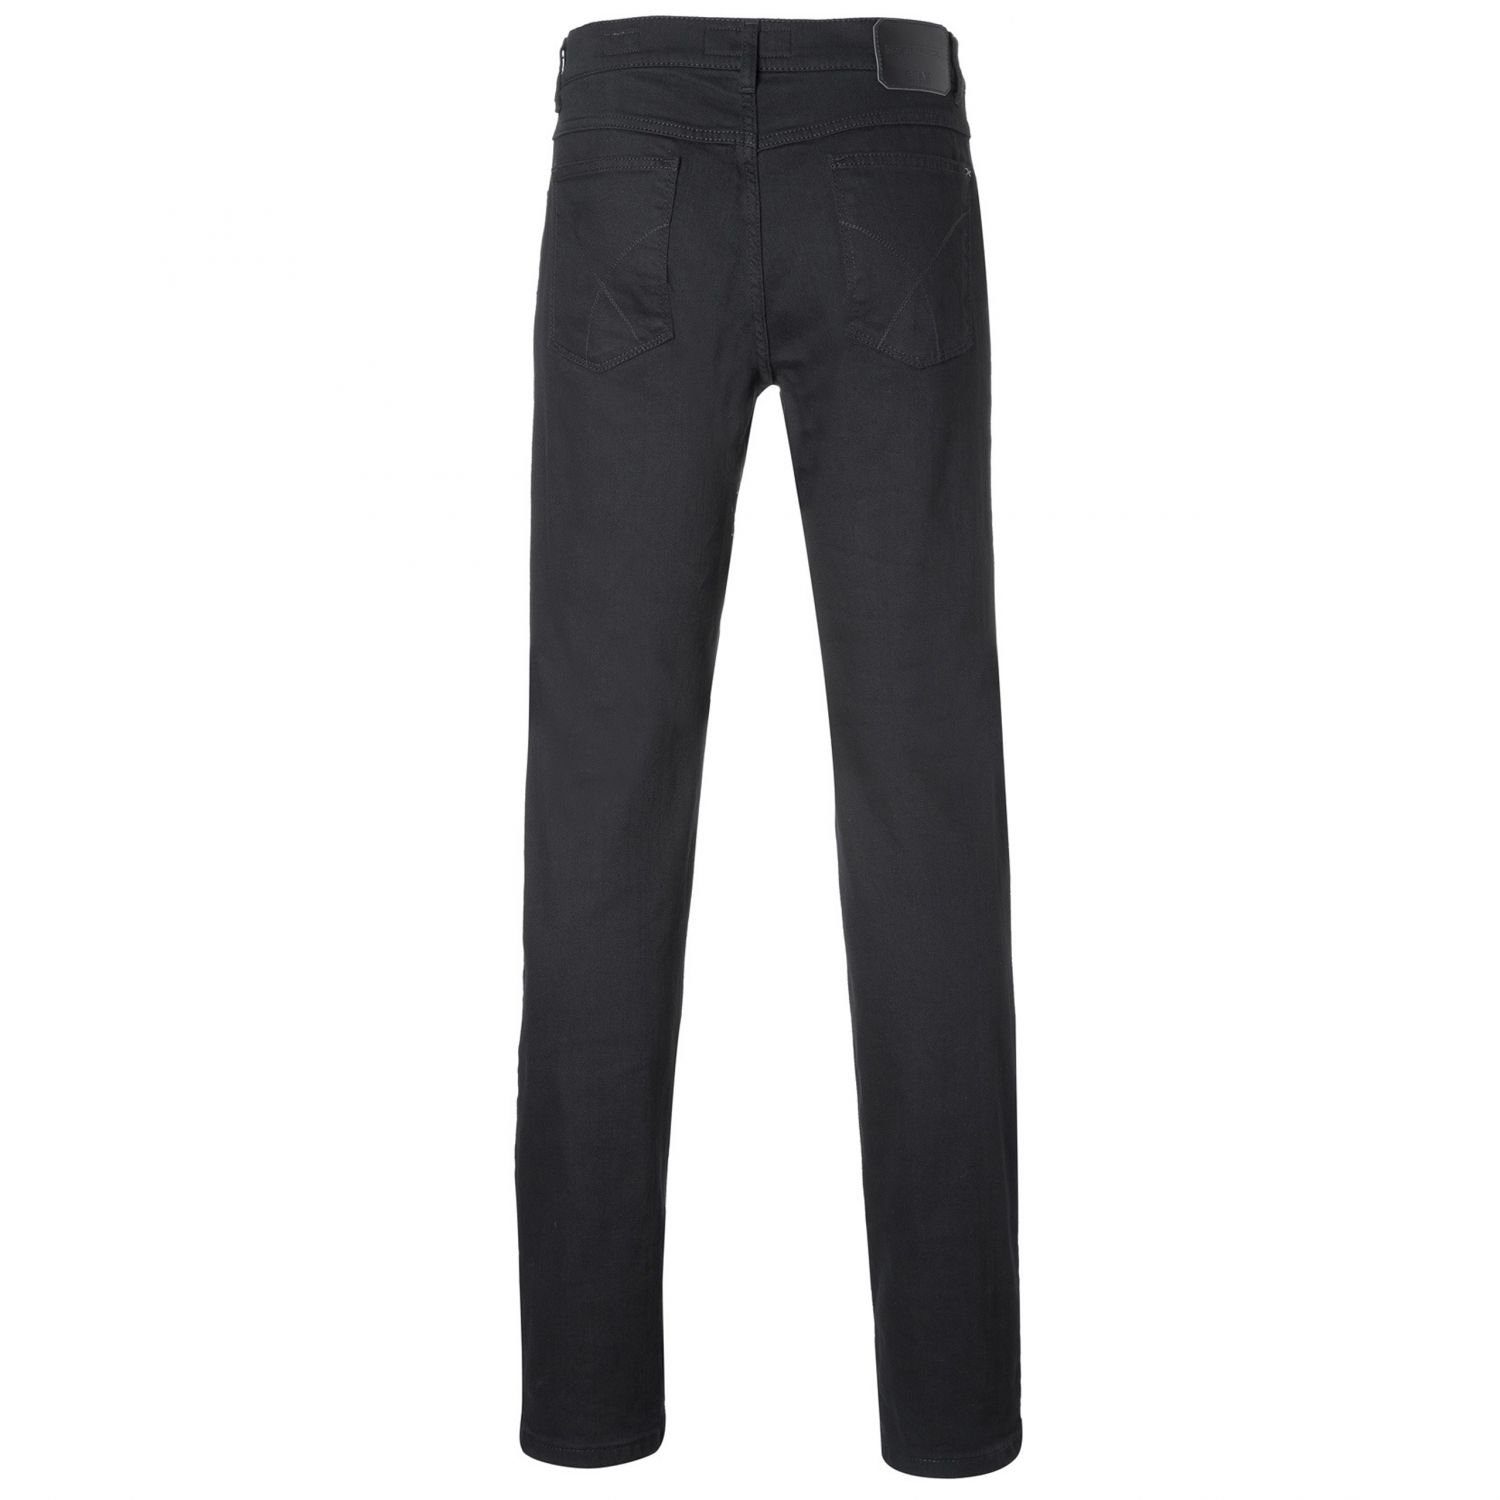 Herren Jeans Brax Denim Style Cooper schwarz 5-Pocket-Jeans